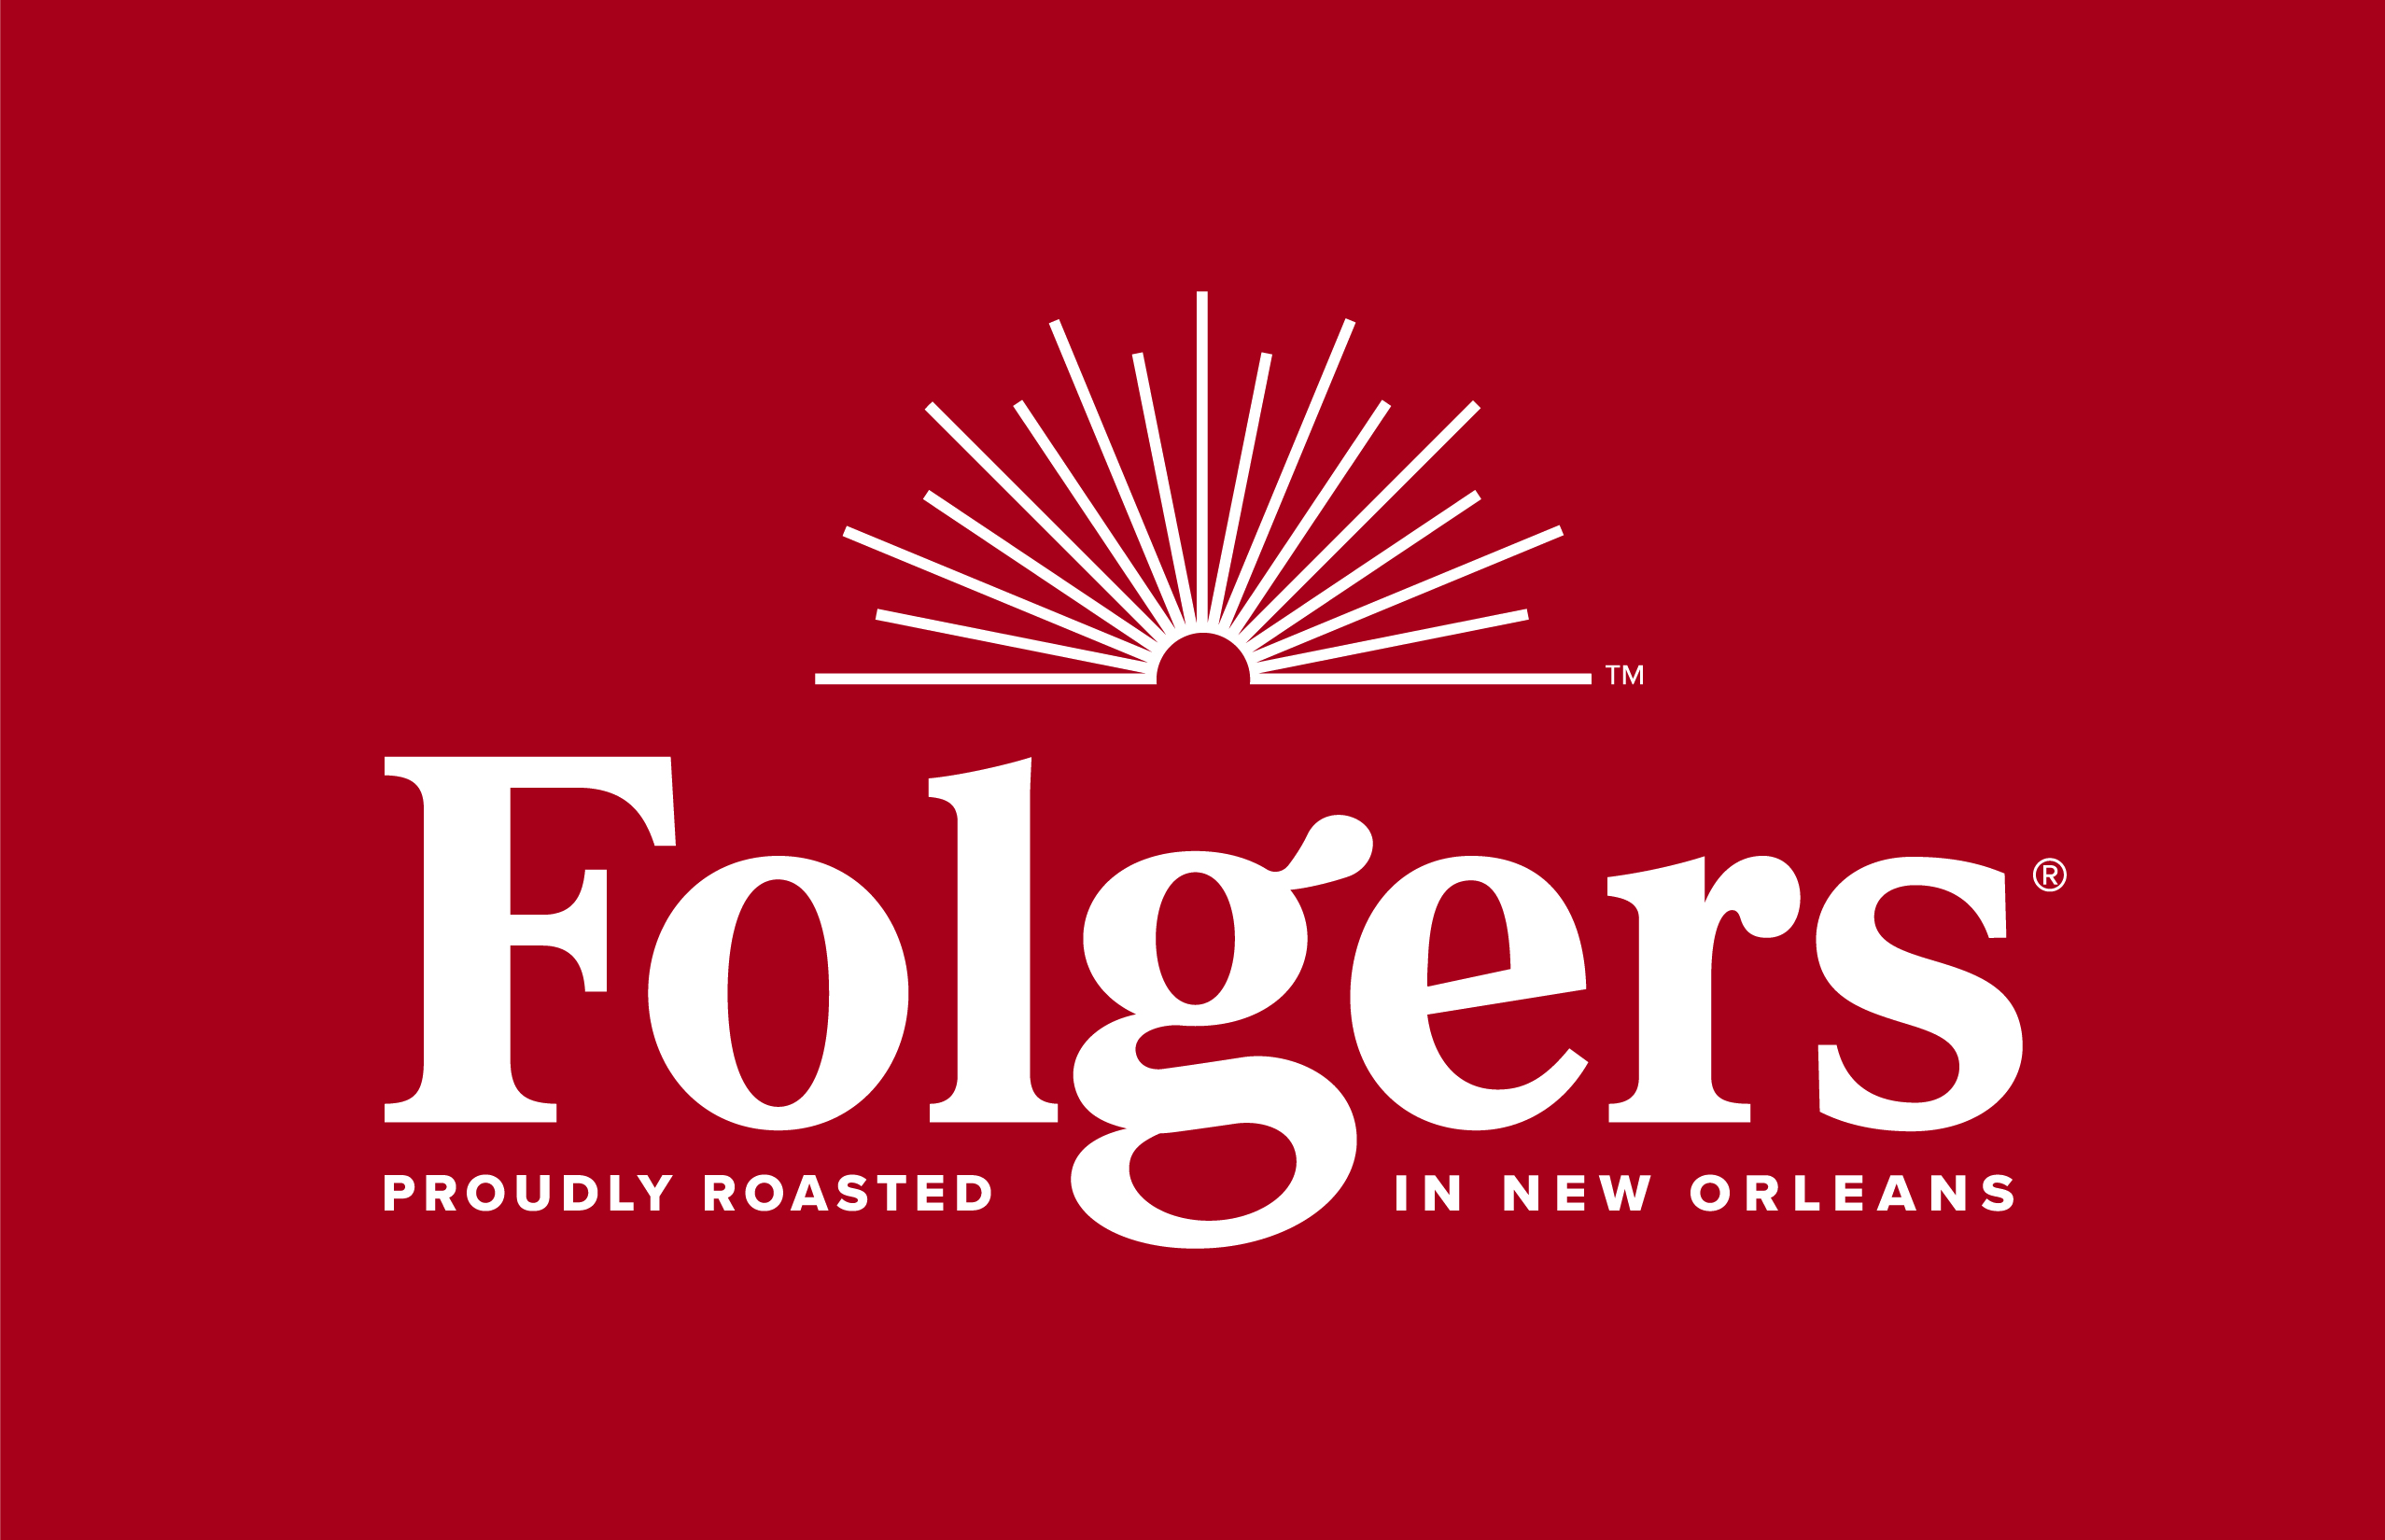 Brand: Folgers